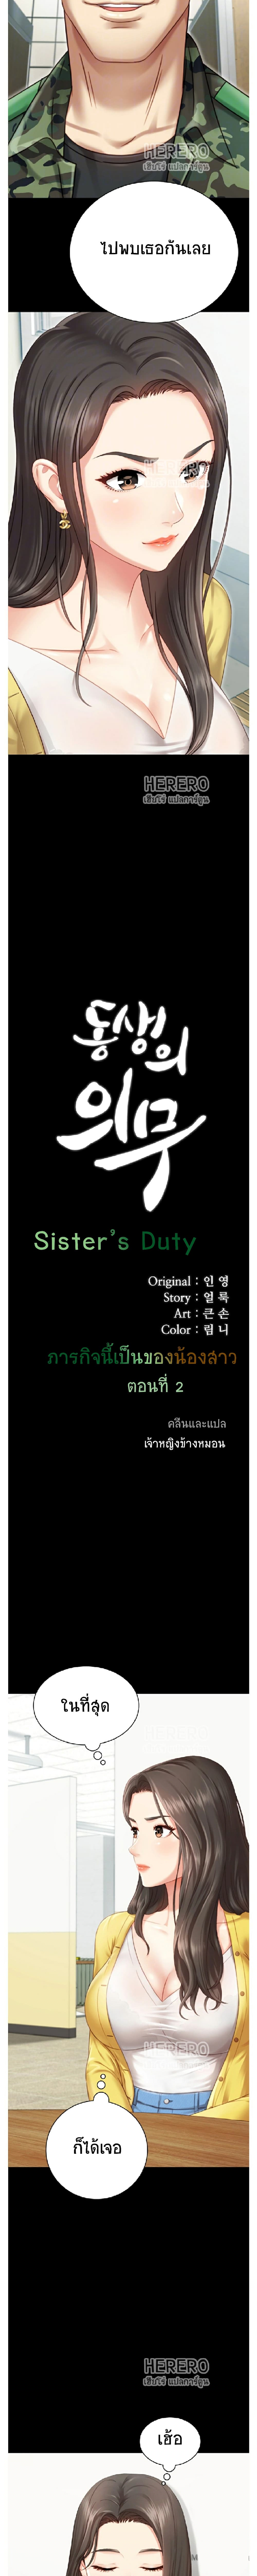 My Sister’s Duty 2 ภาพที่ 2